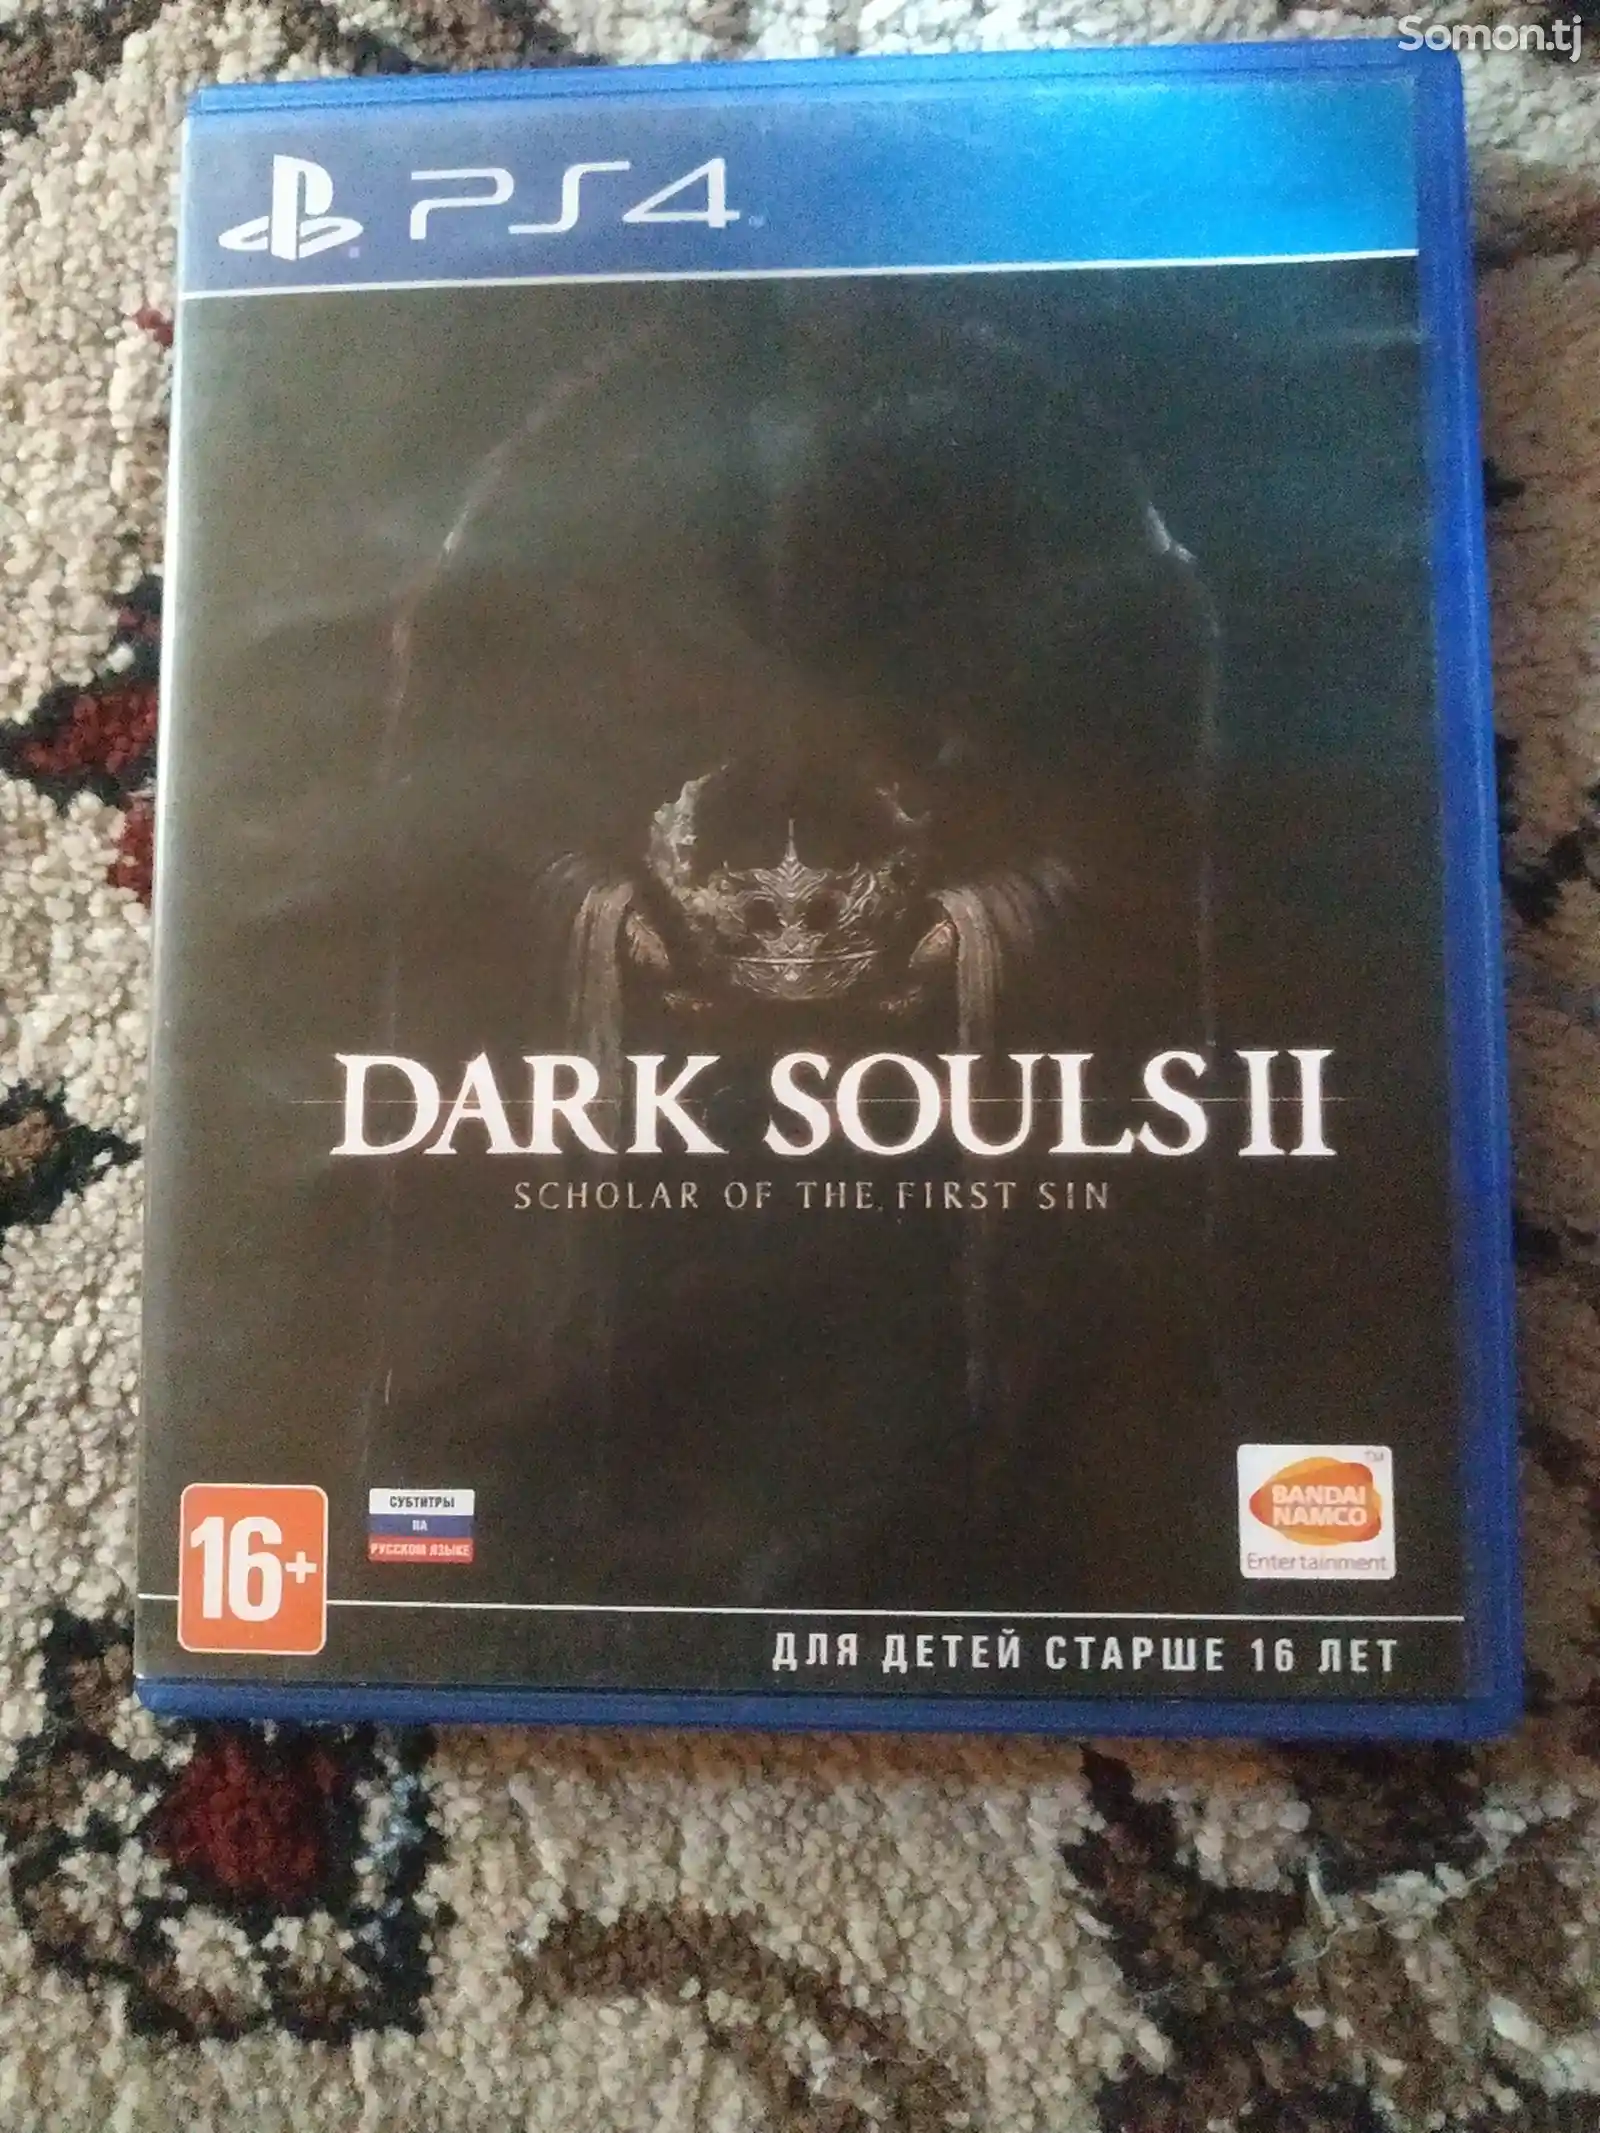 Игра Dark Souls 2 для ps4